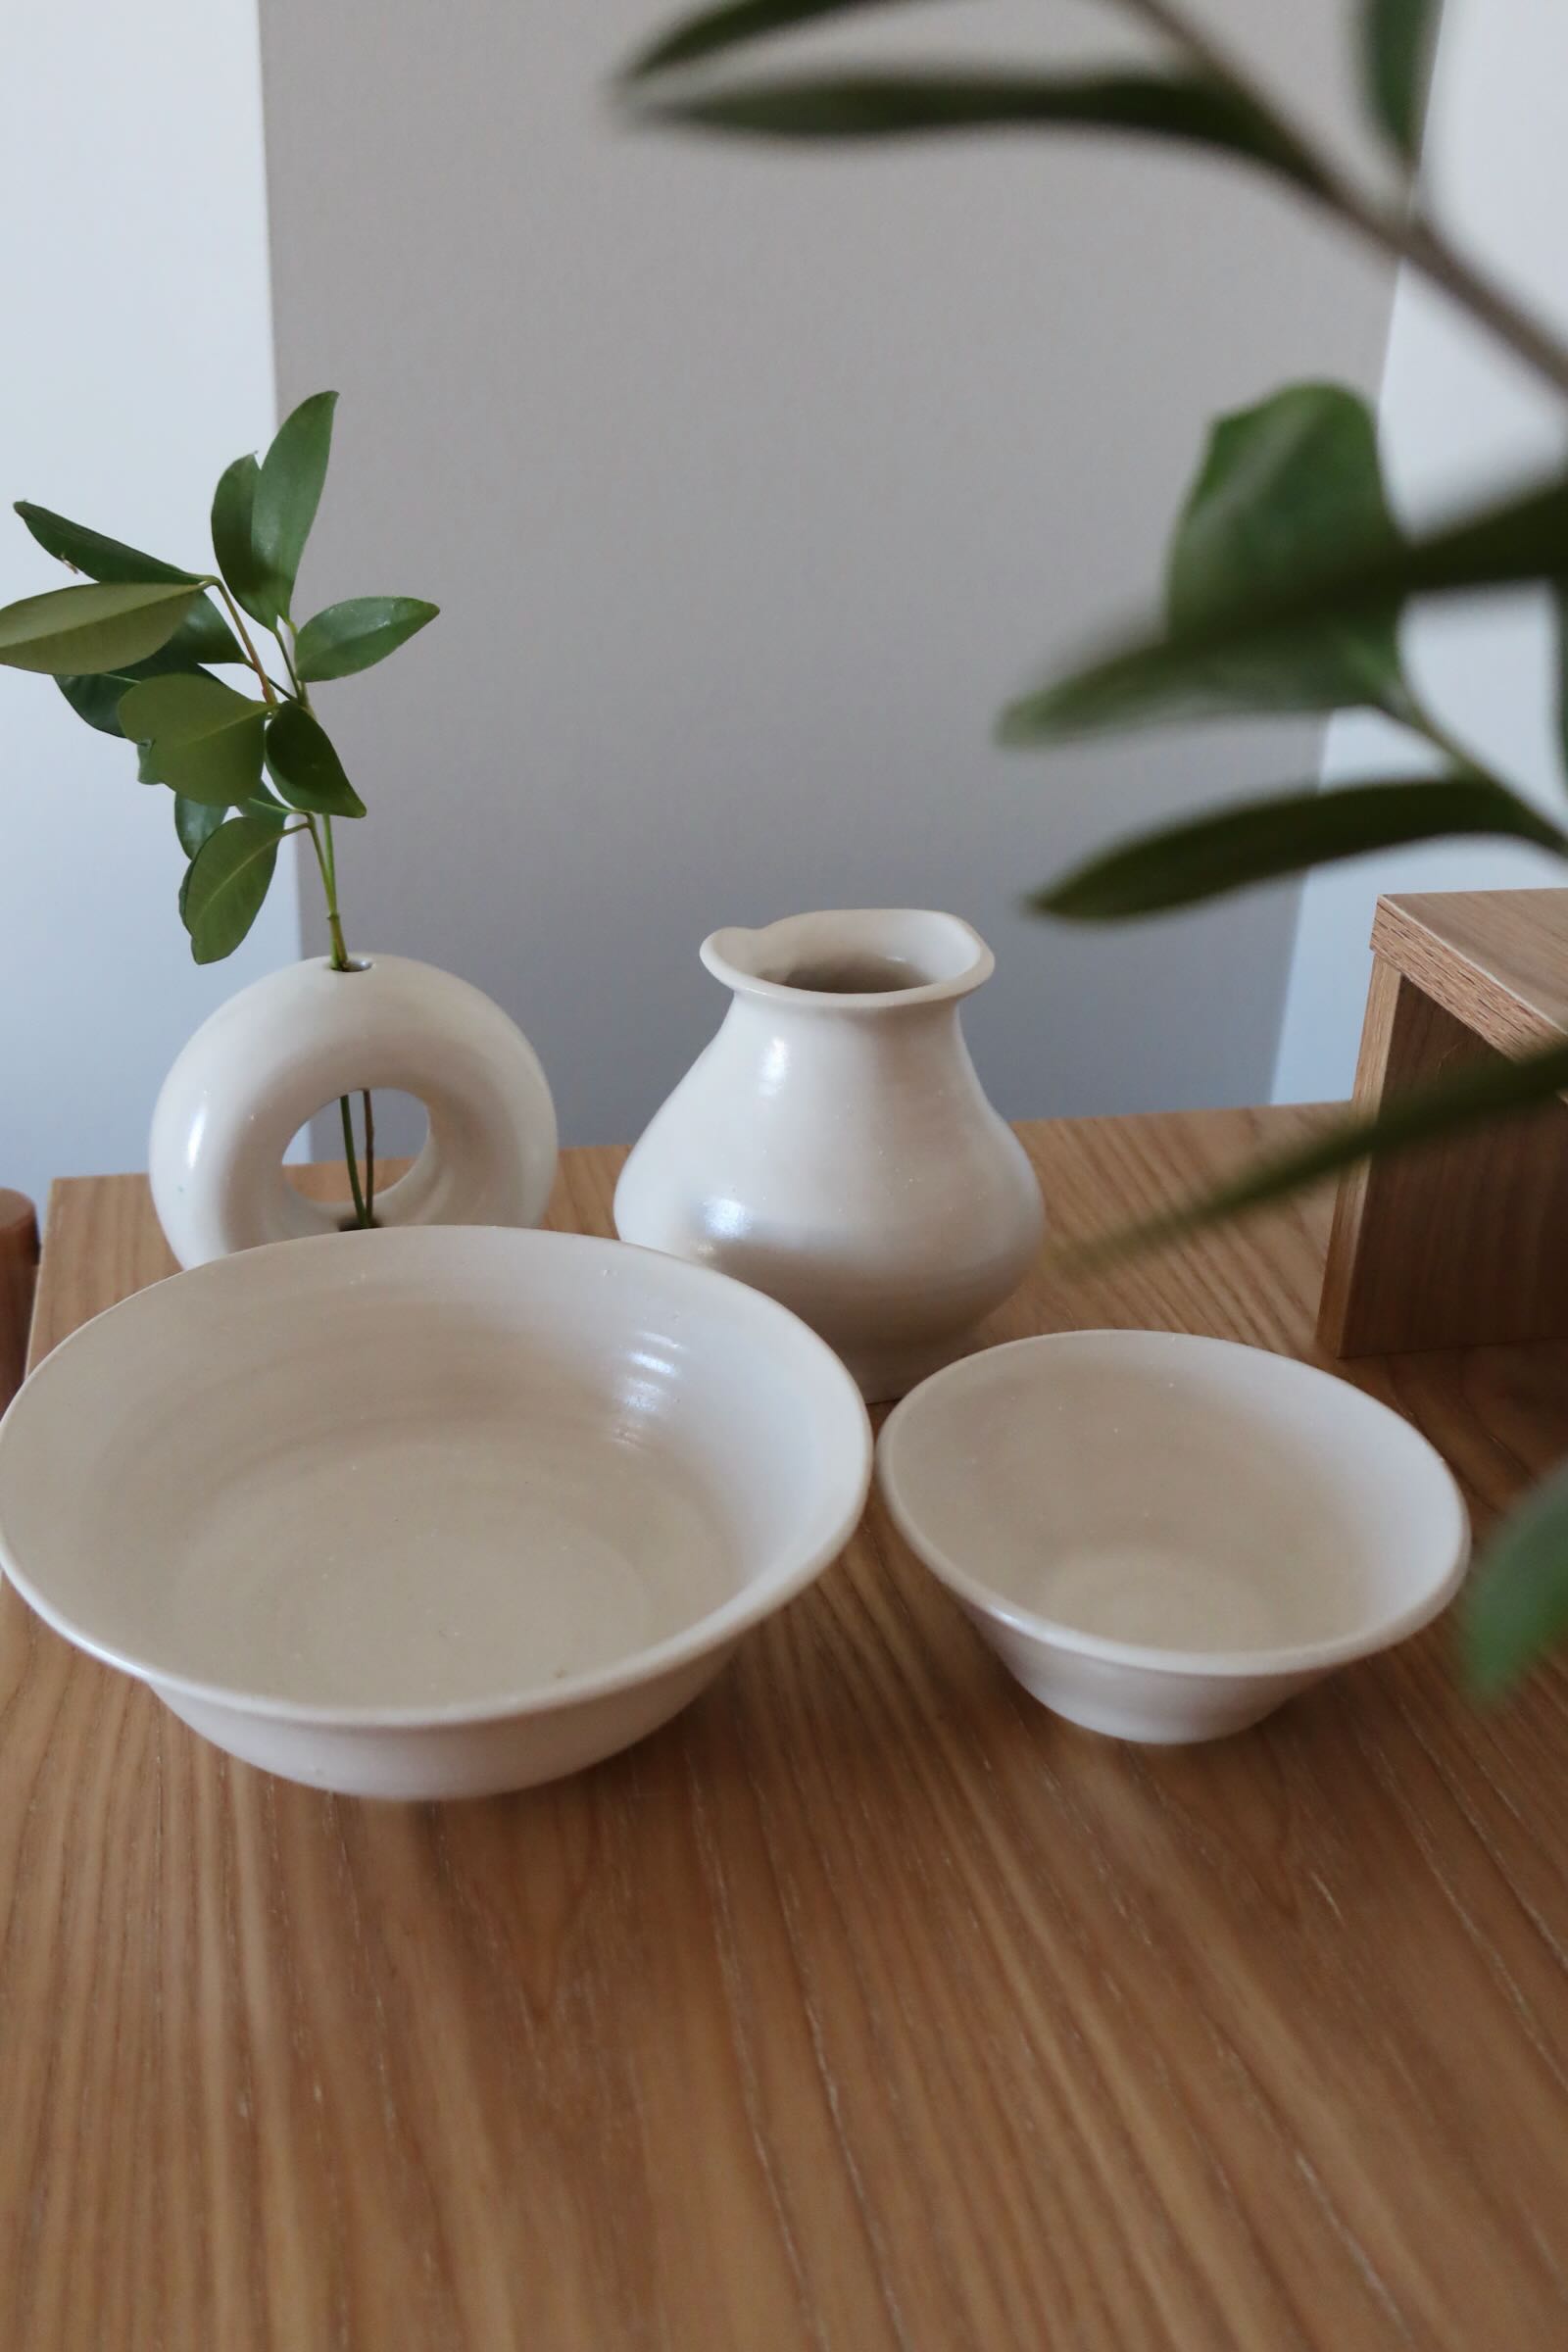 Photo of white ceramic bowls and vases